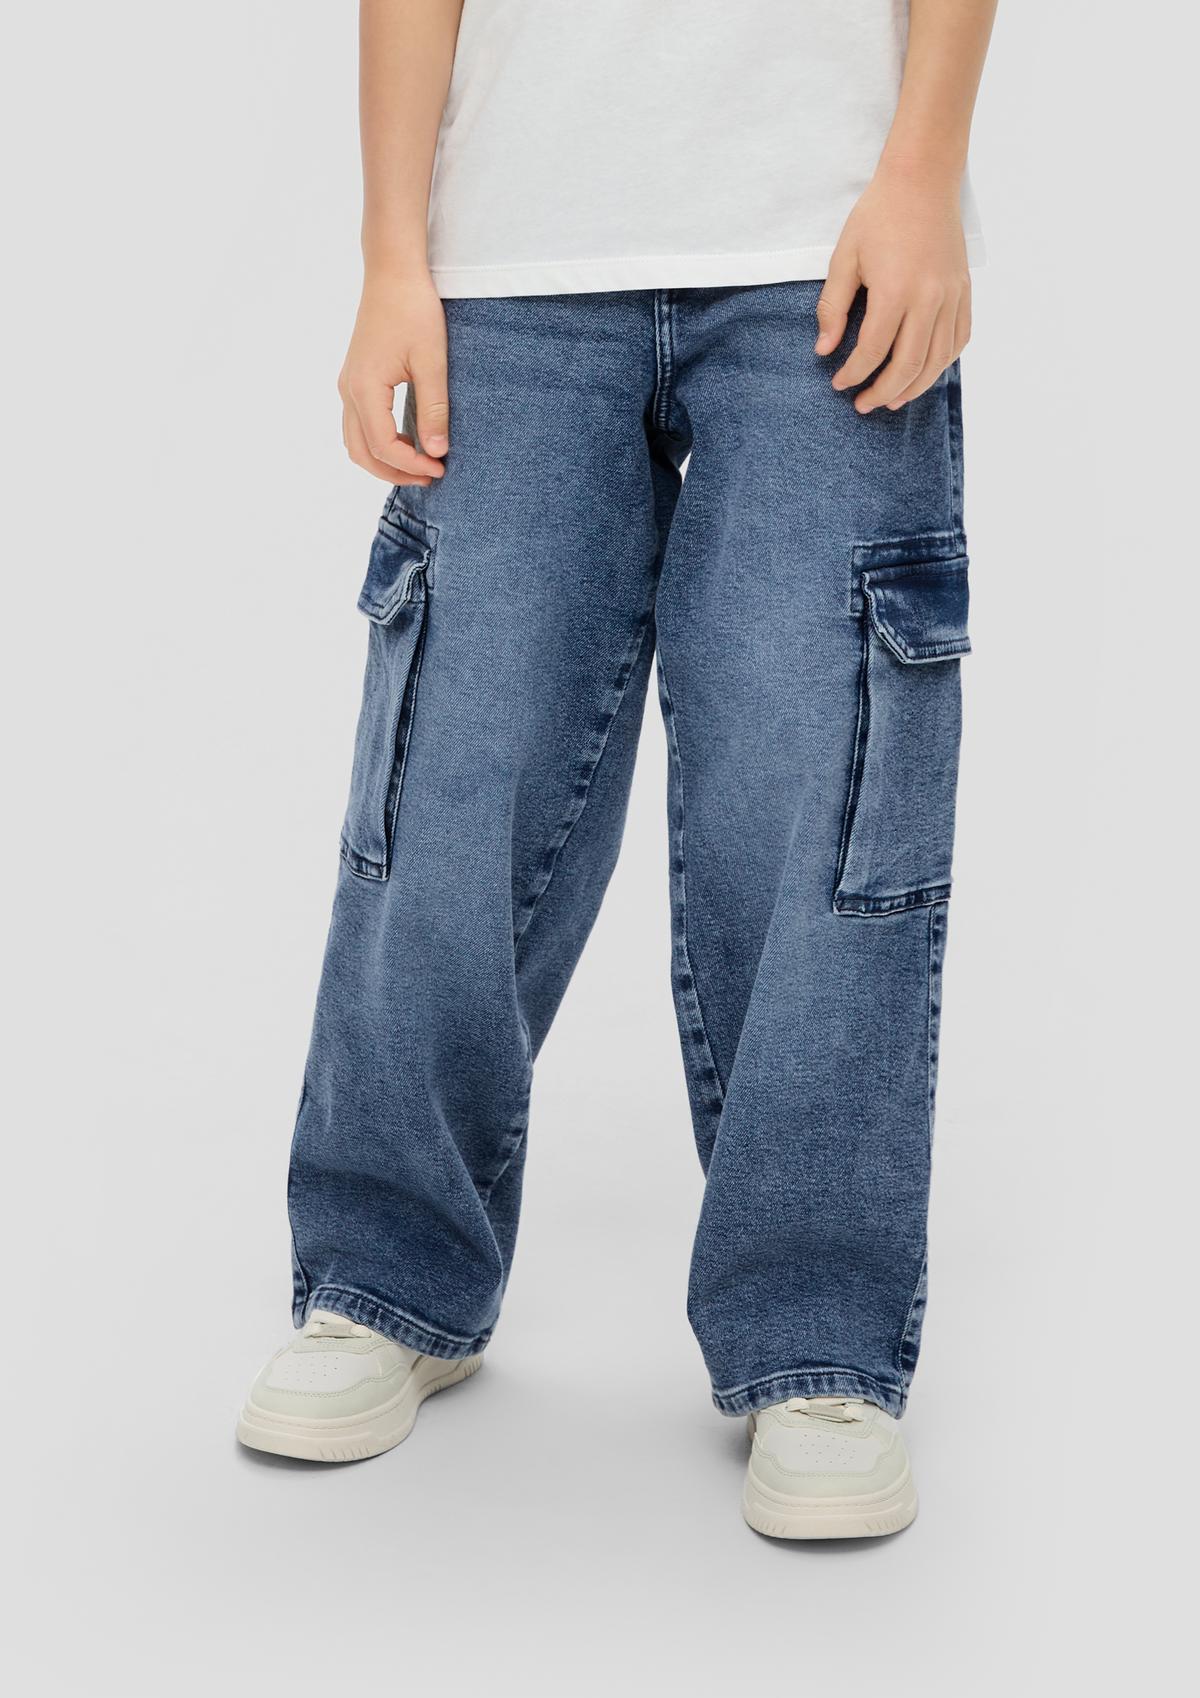 Jeans / regular fit / mid rise / slim fit